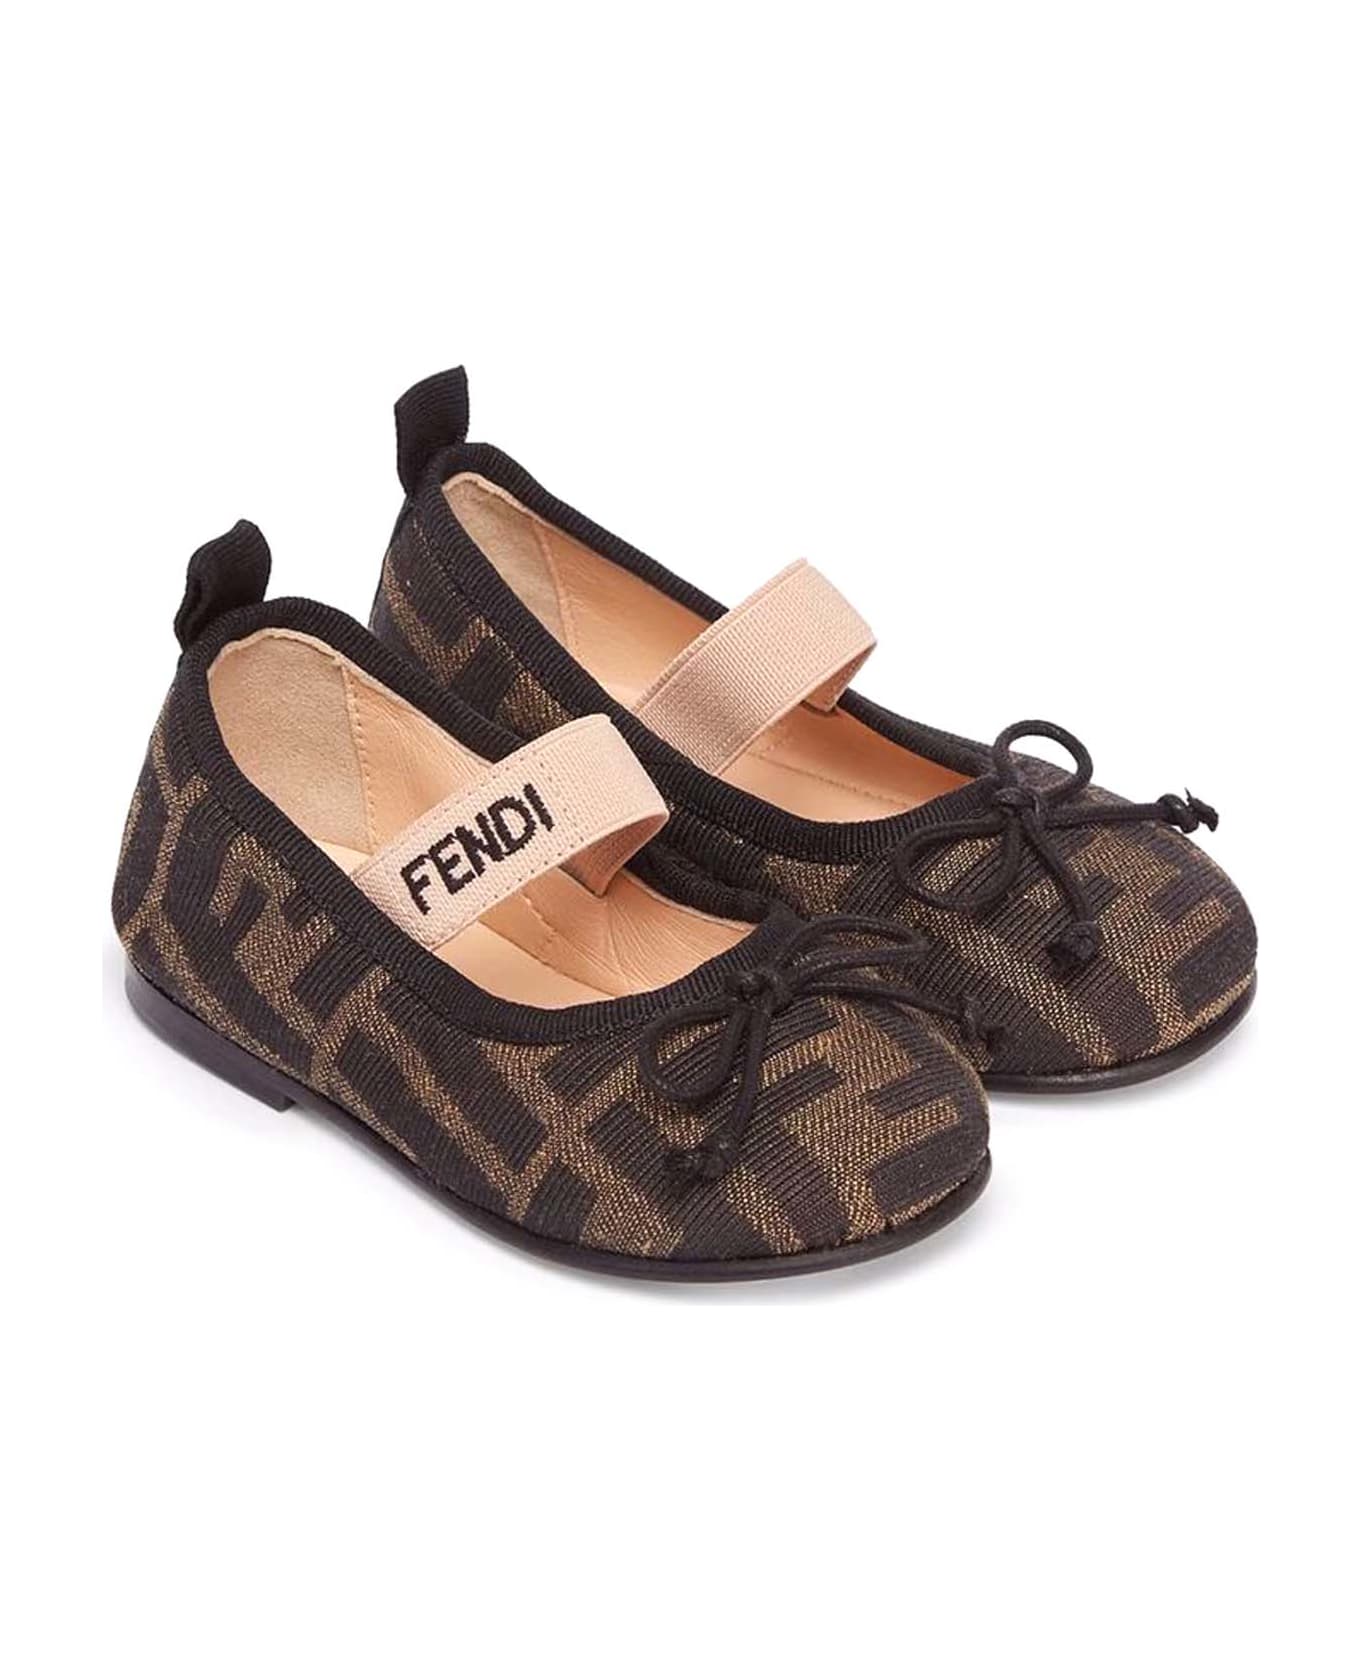 Fendi Kids Flat Shoes Brown - Brown シューズ